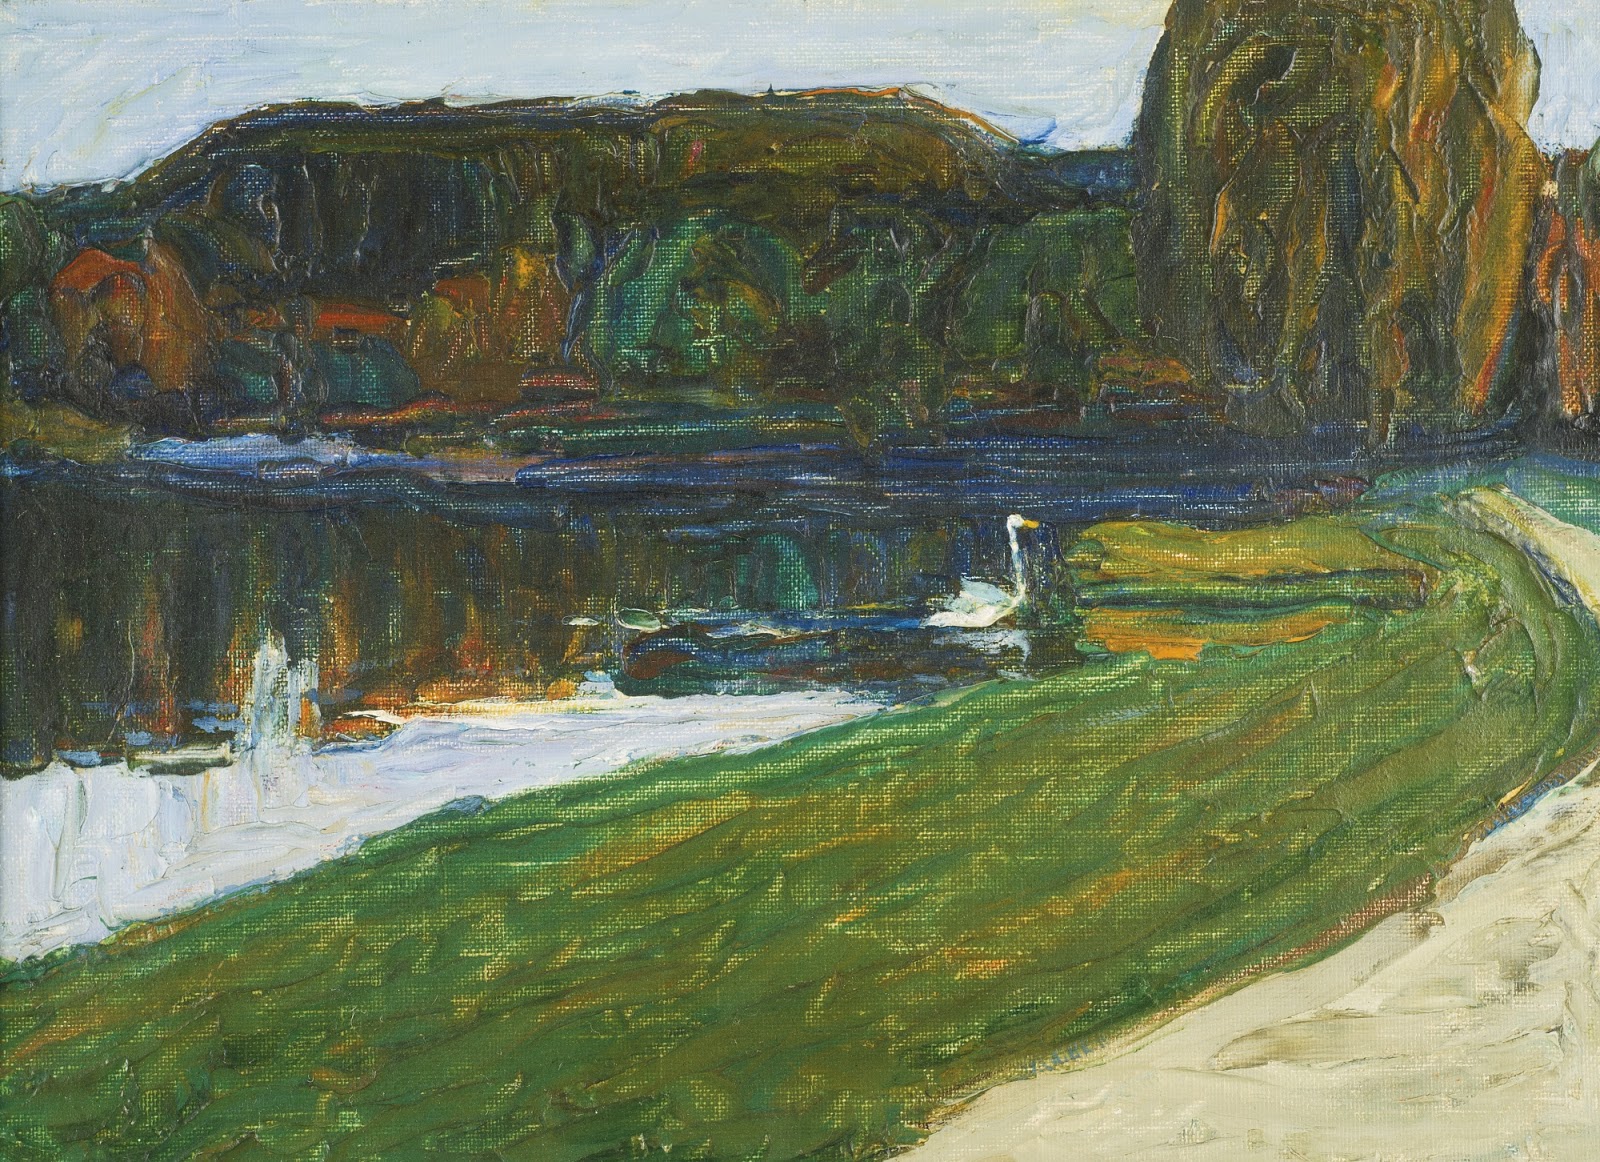 Wassily+Kandinsky-1866-1944 (375).jpg